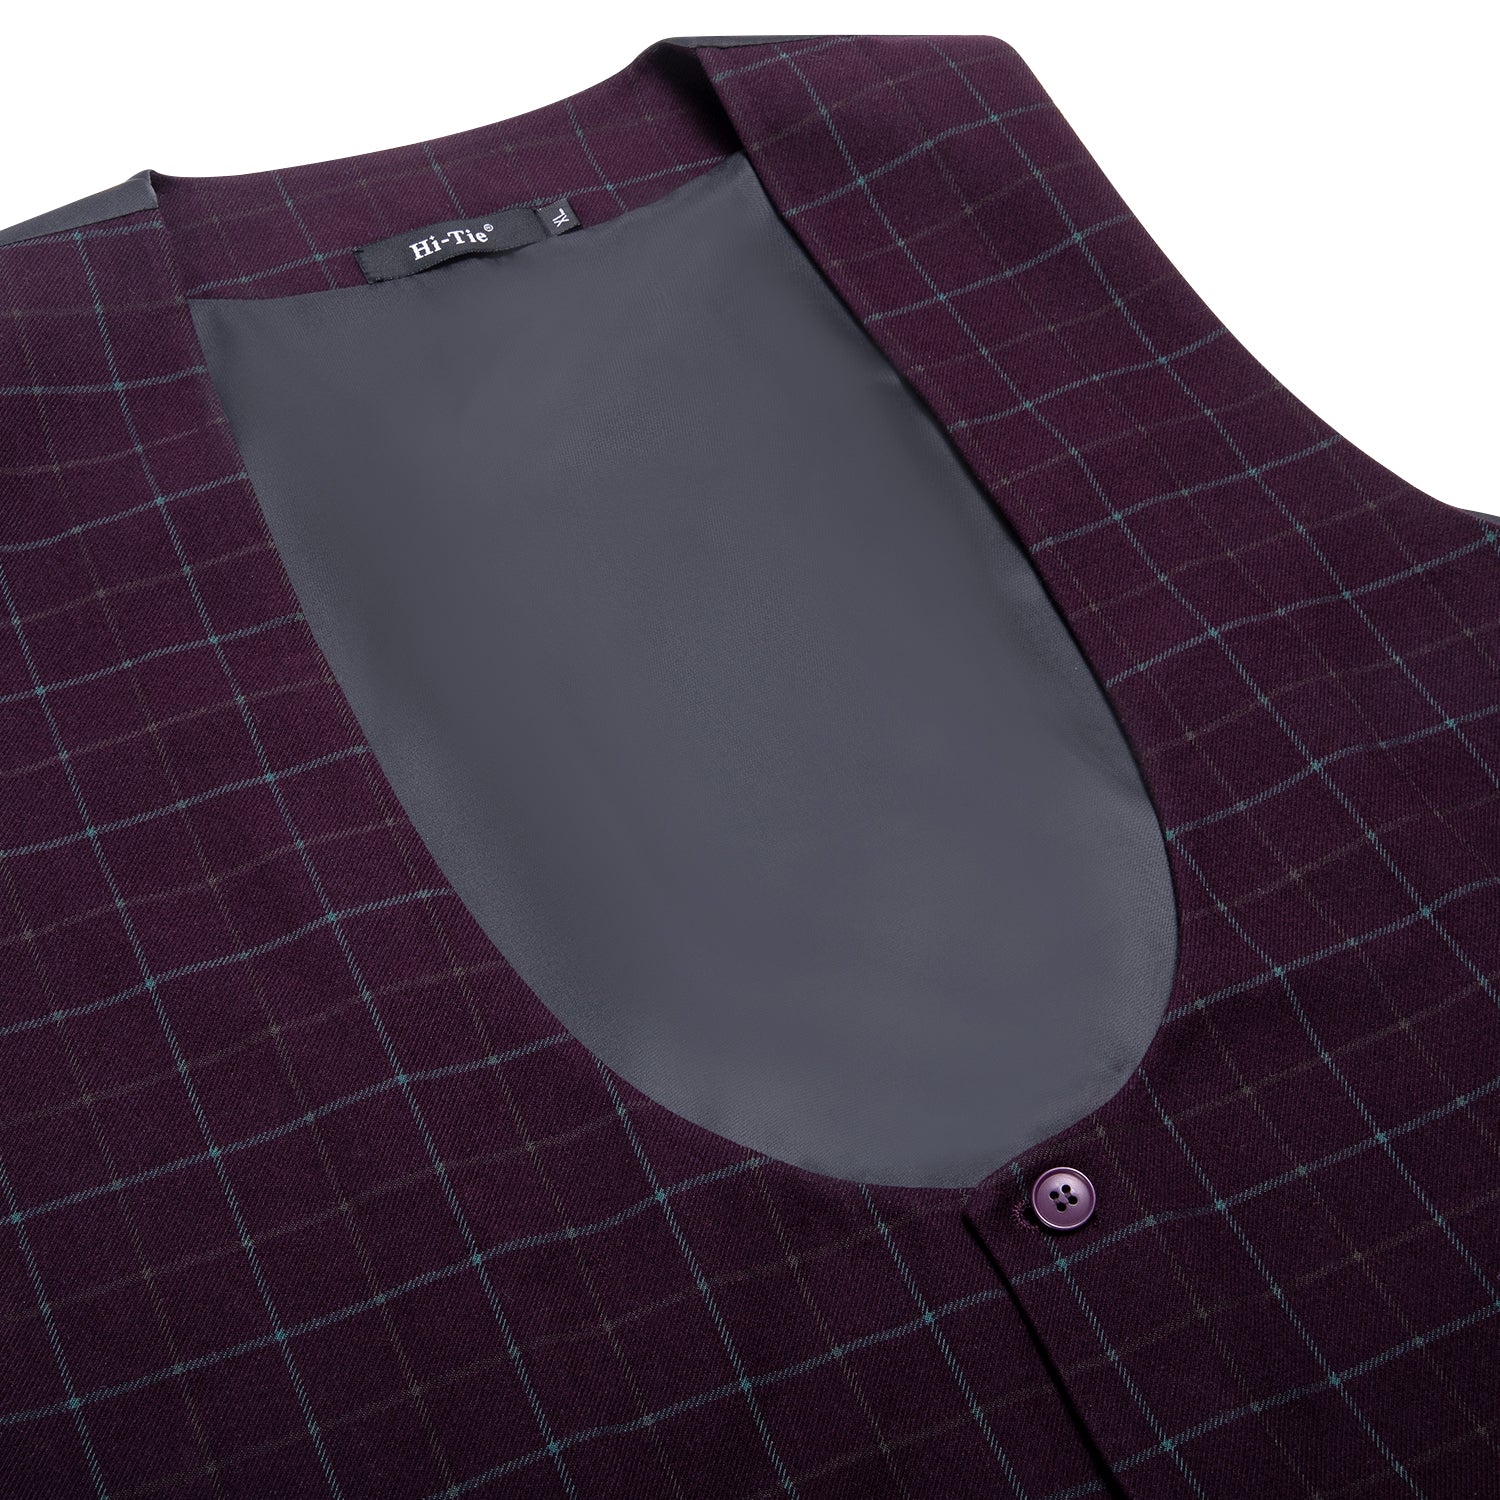 Burgundy Plaid Men's Vest Hanky Cufflinks Tie Set Waistcoat Suit Set